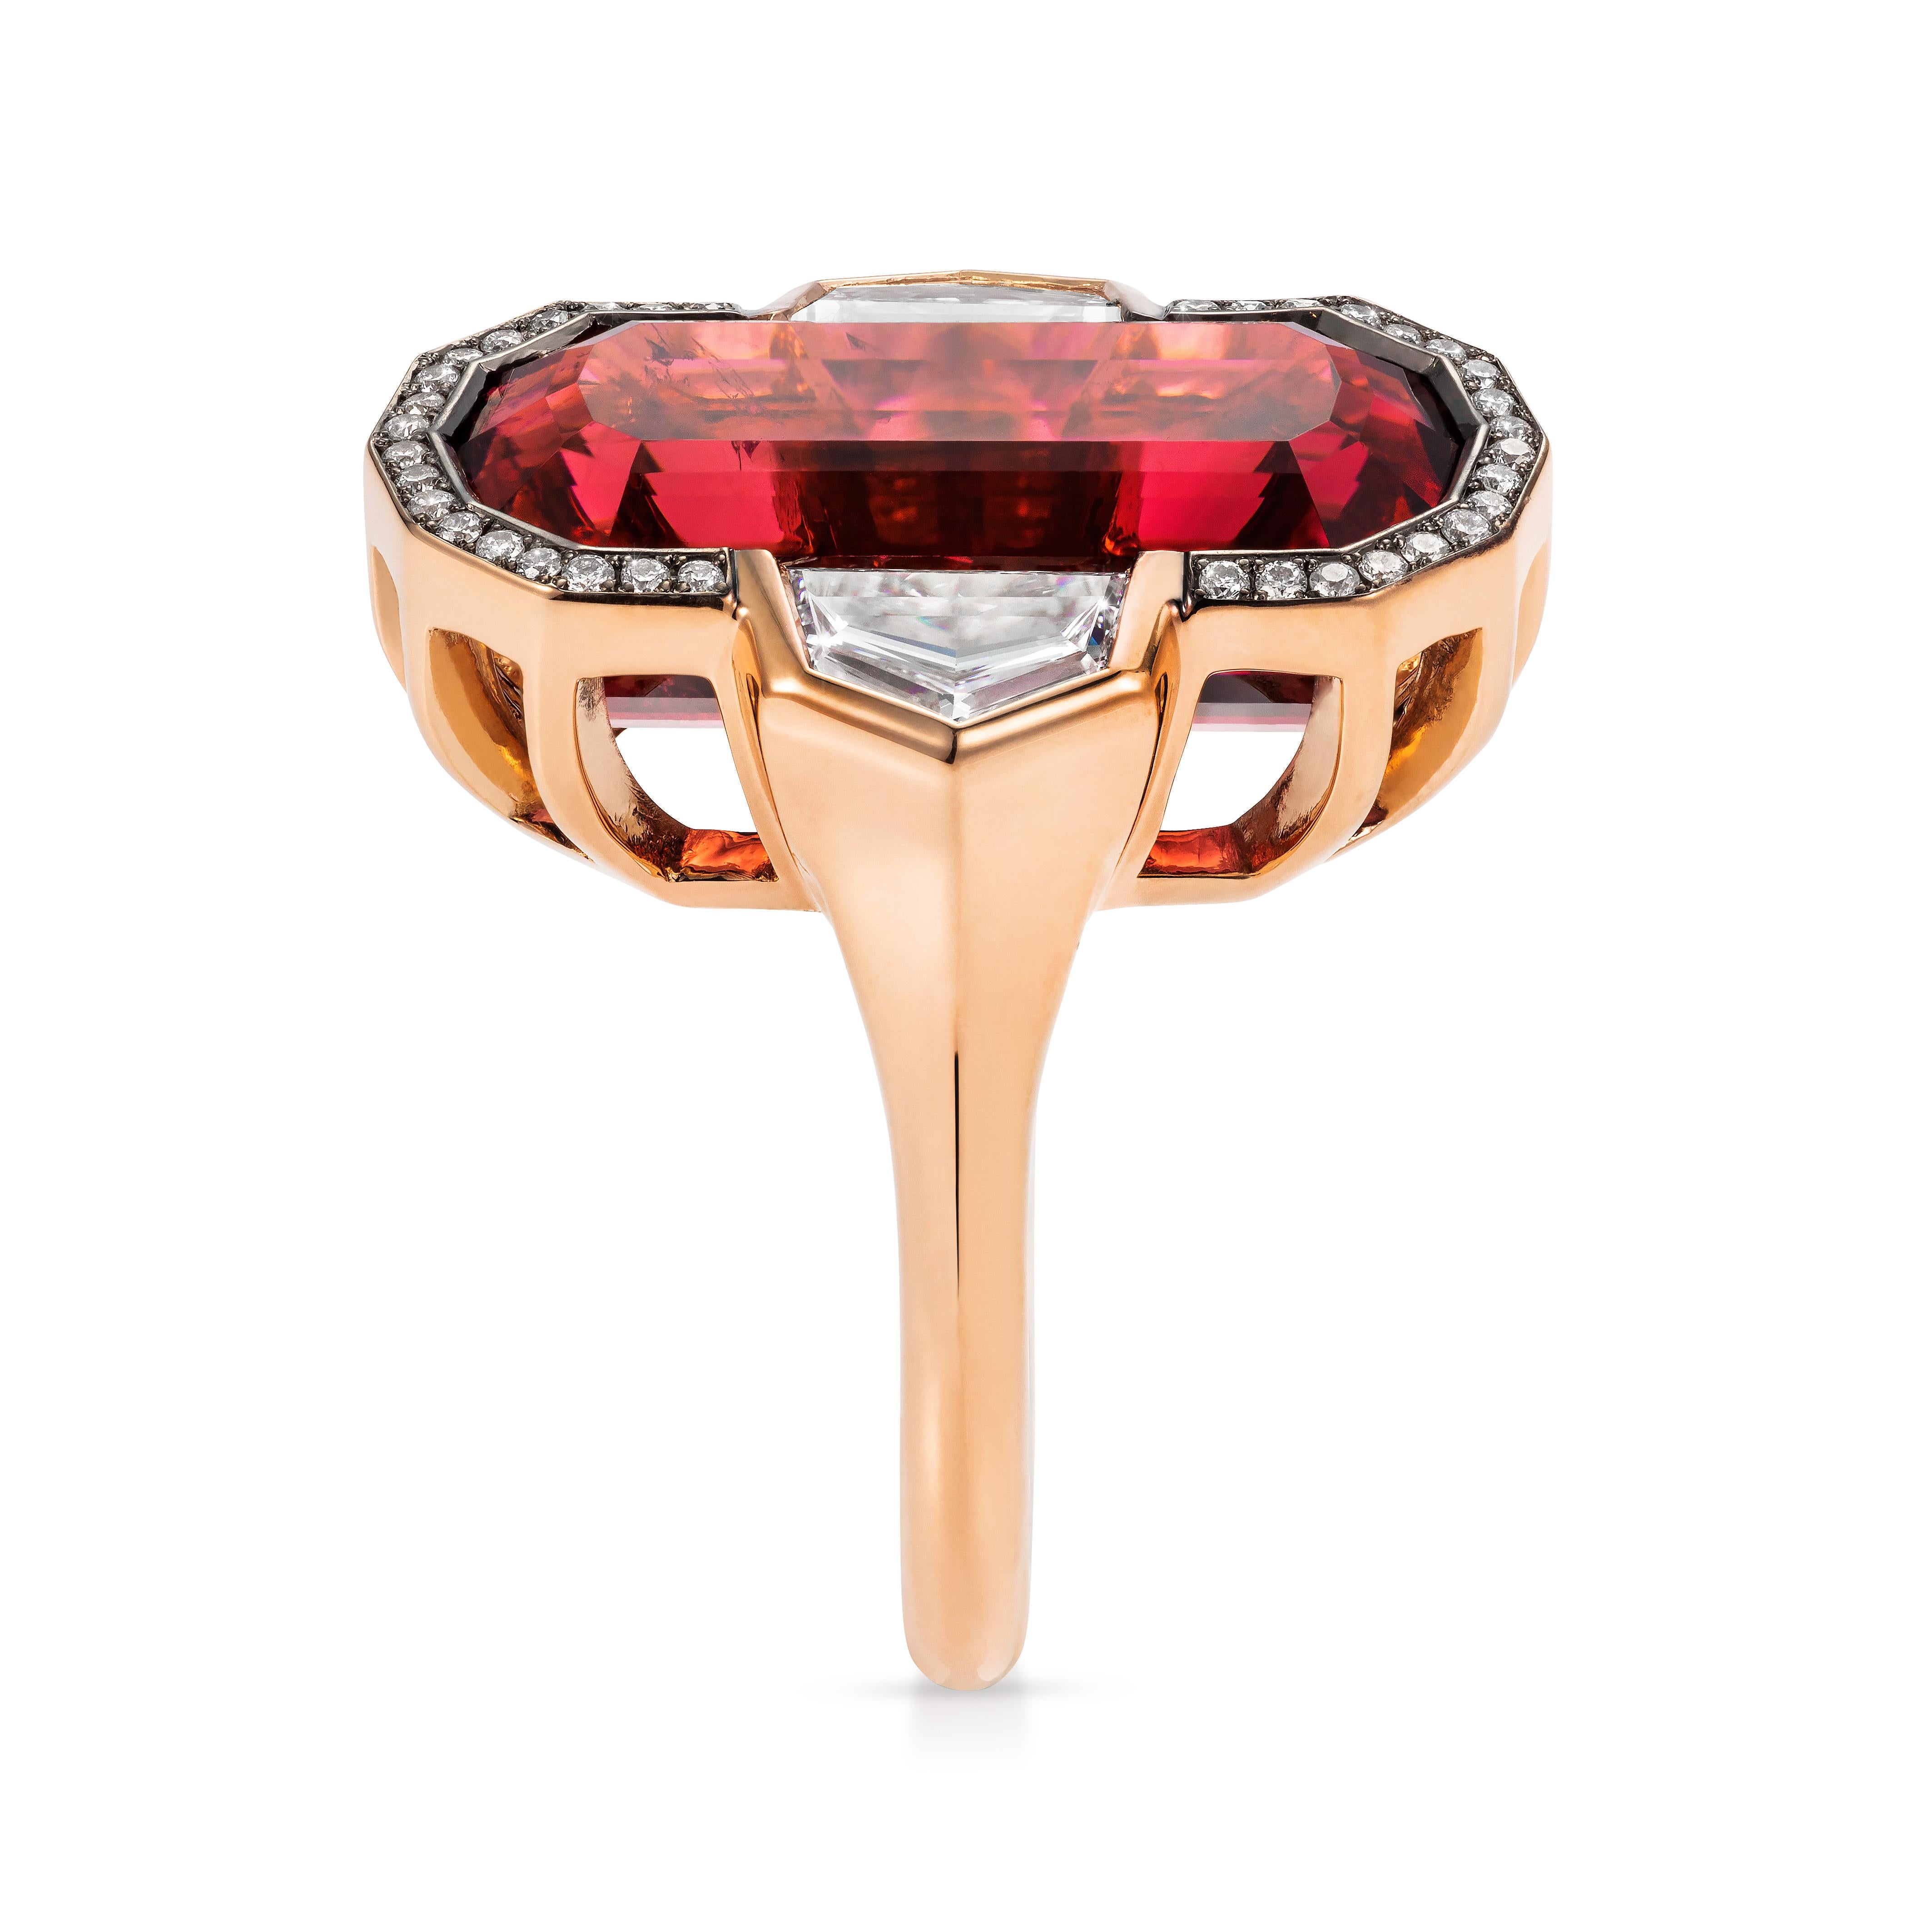 Contemporary Marcel Salloum 0.41 Ct Decagonal Rubellite Diamond Ring in 18 Karat Rose Gold For Sale